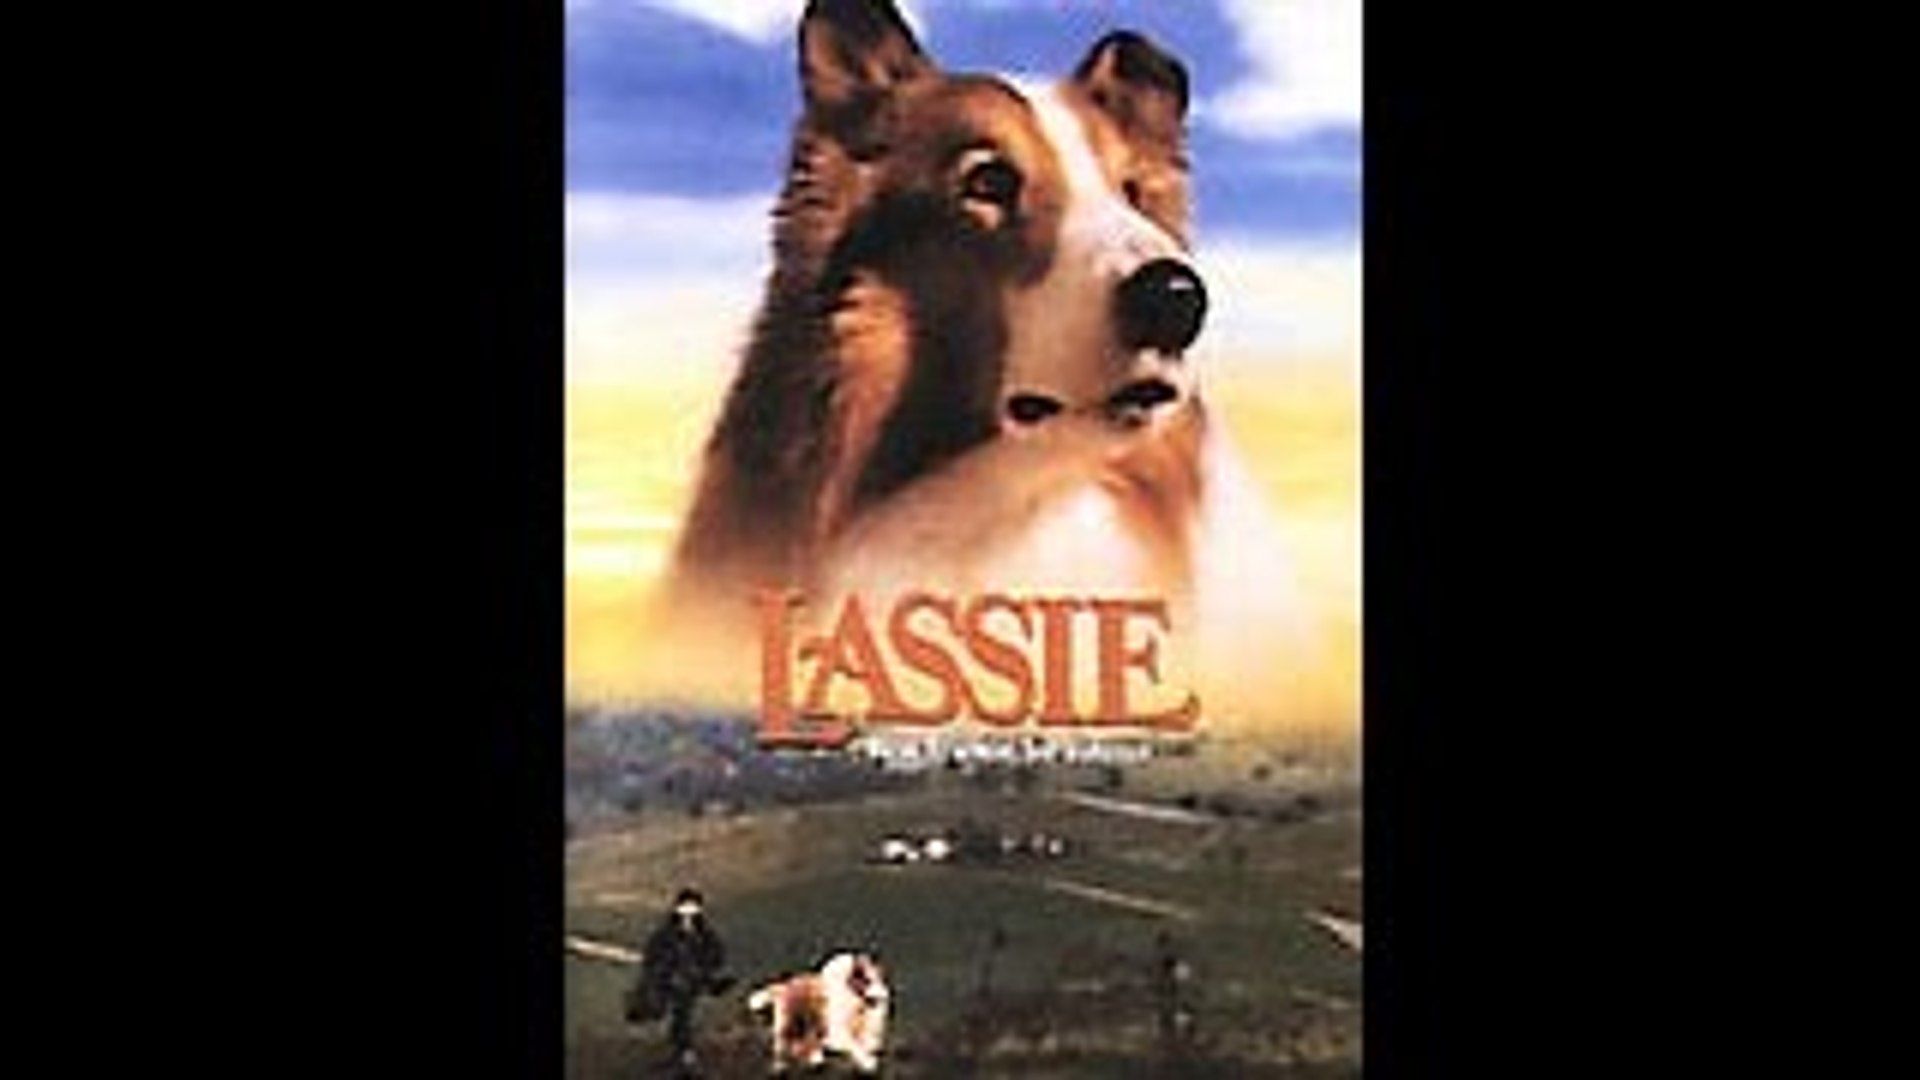 Lassie 1994 Wallpapers Wallpaper Cave 